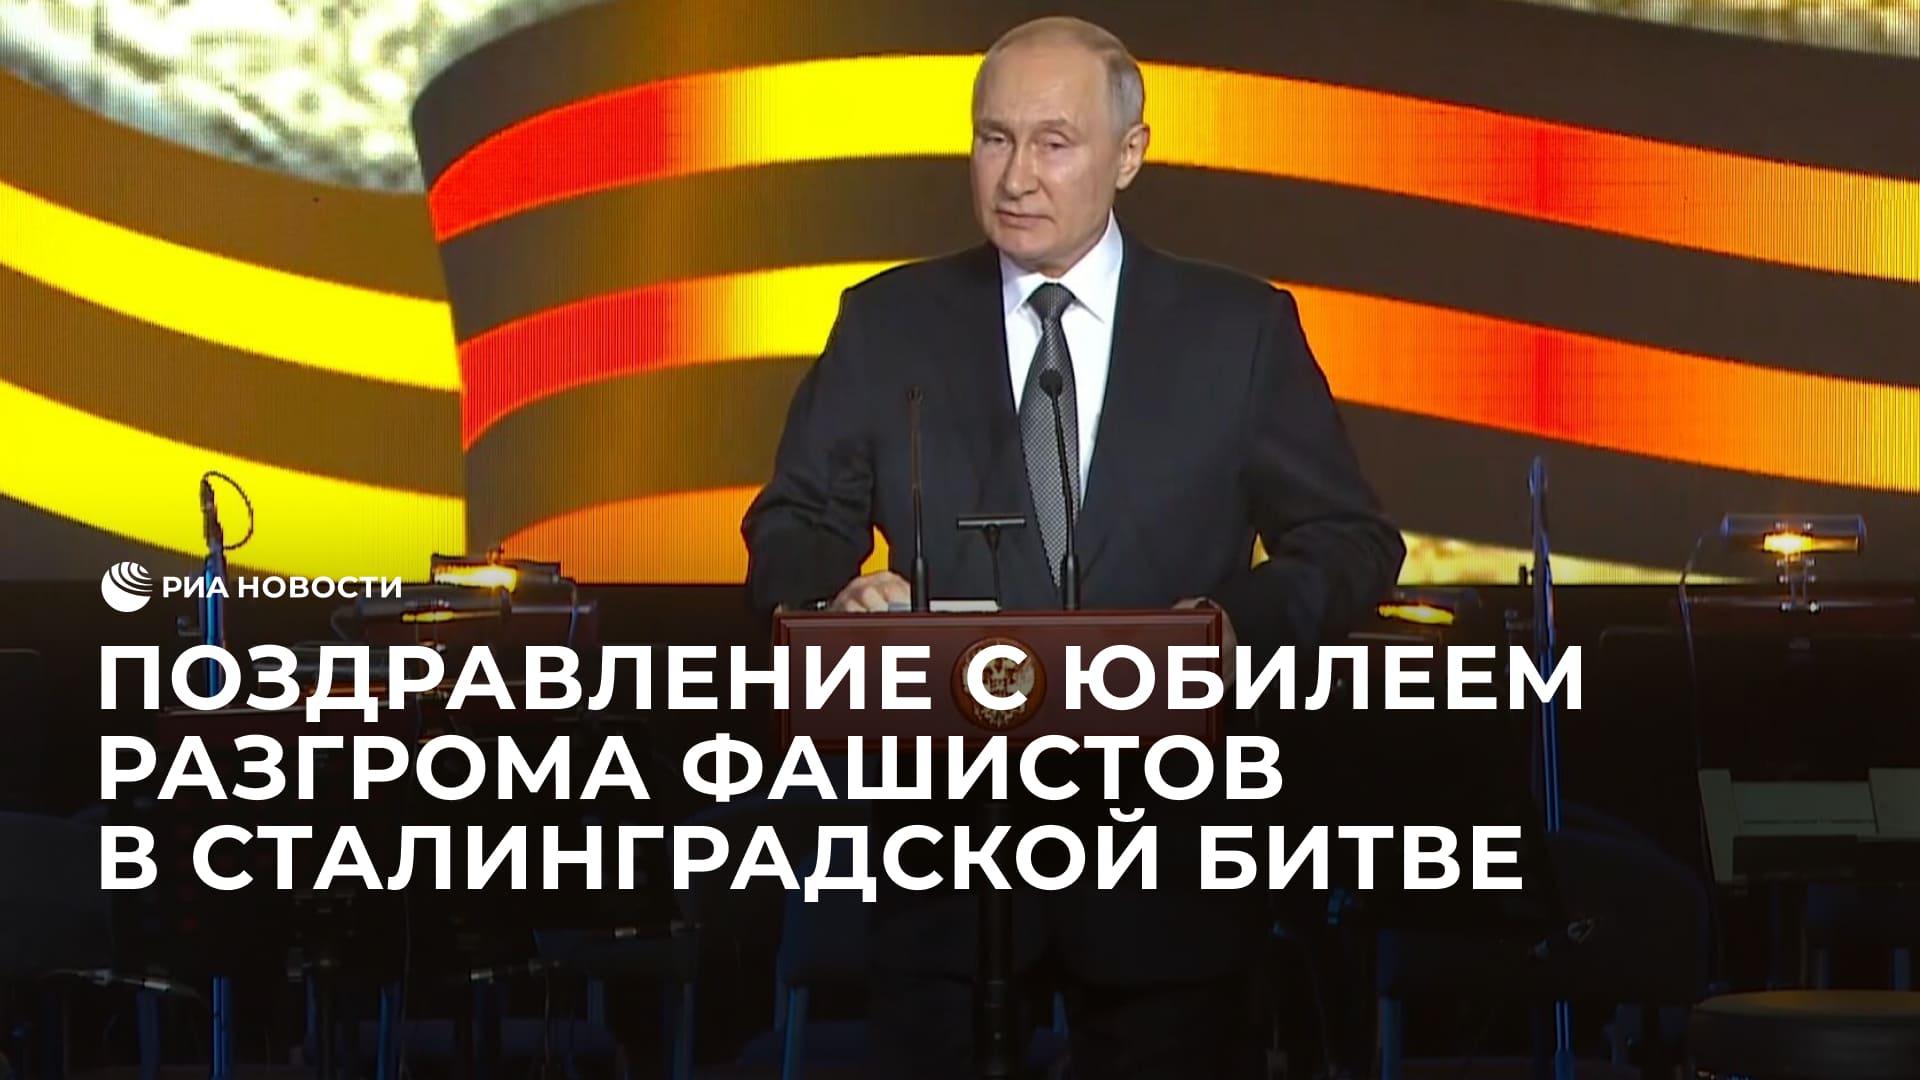 Путин поздравил россиян с юбилеем разгрома фашистов в Сталинградской битве